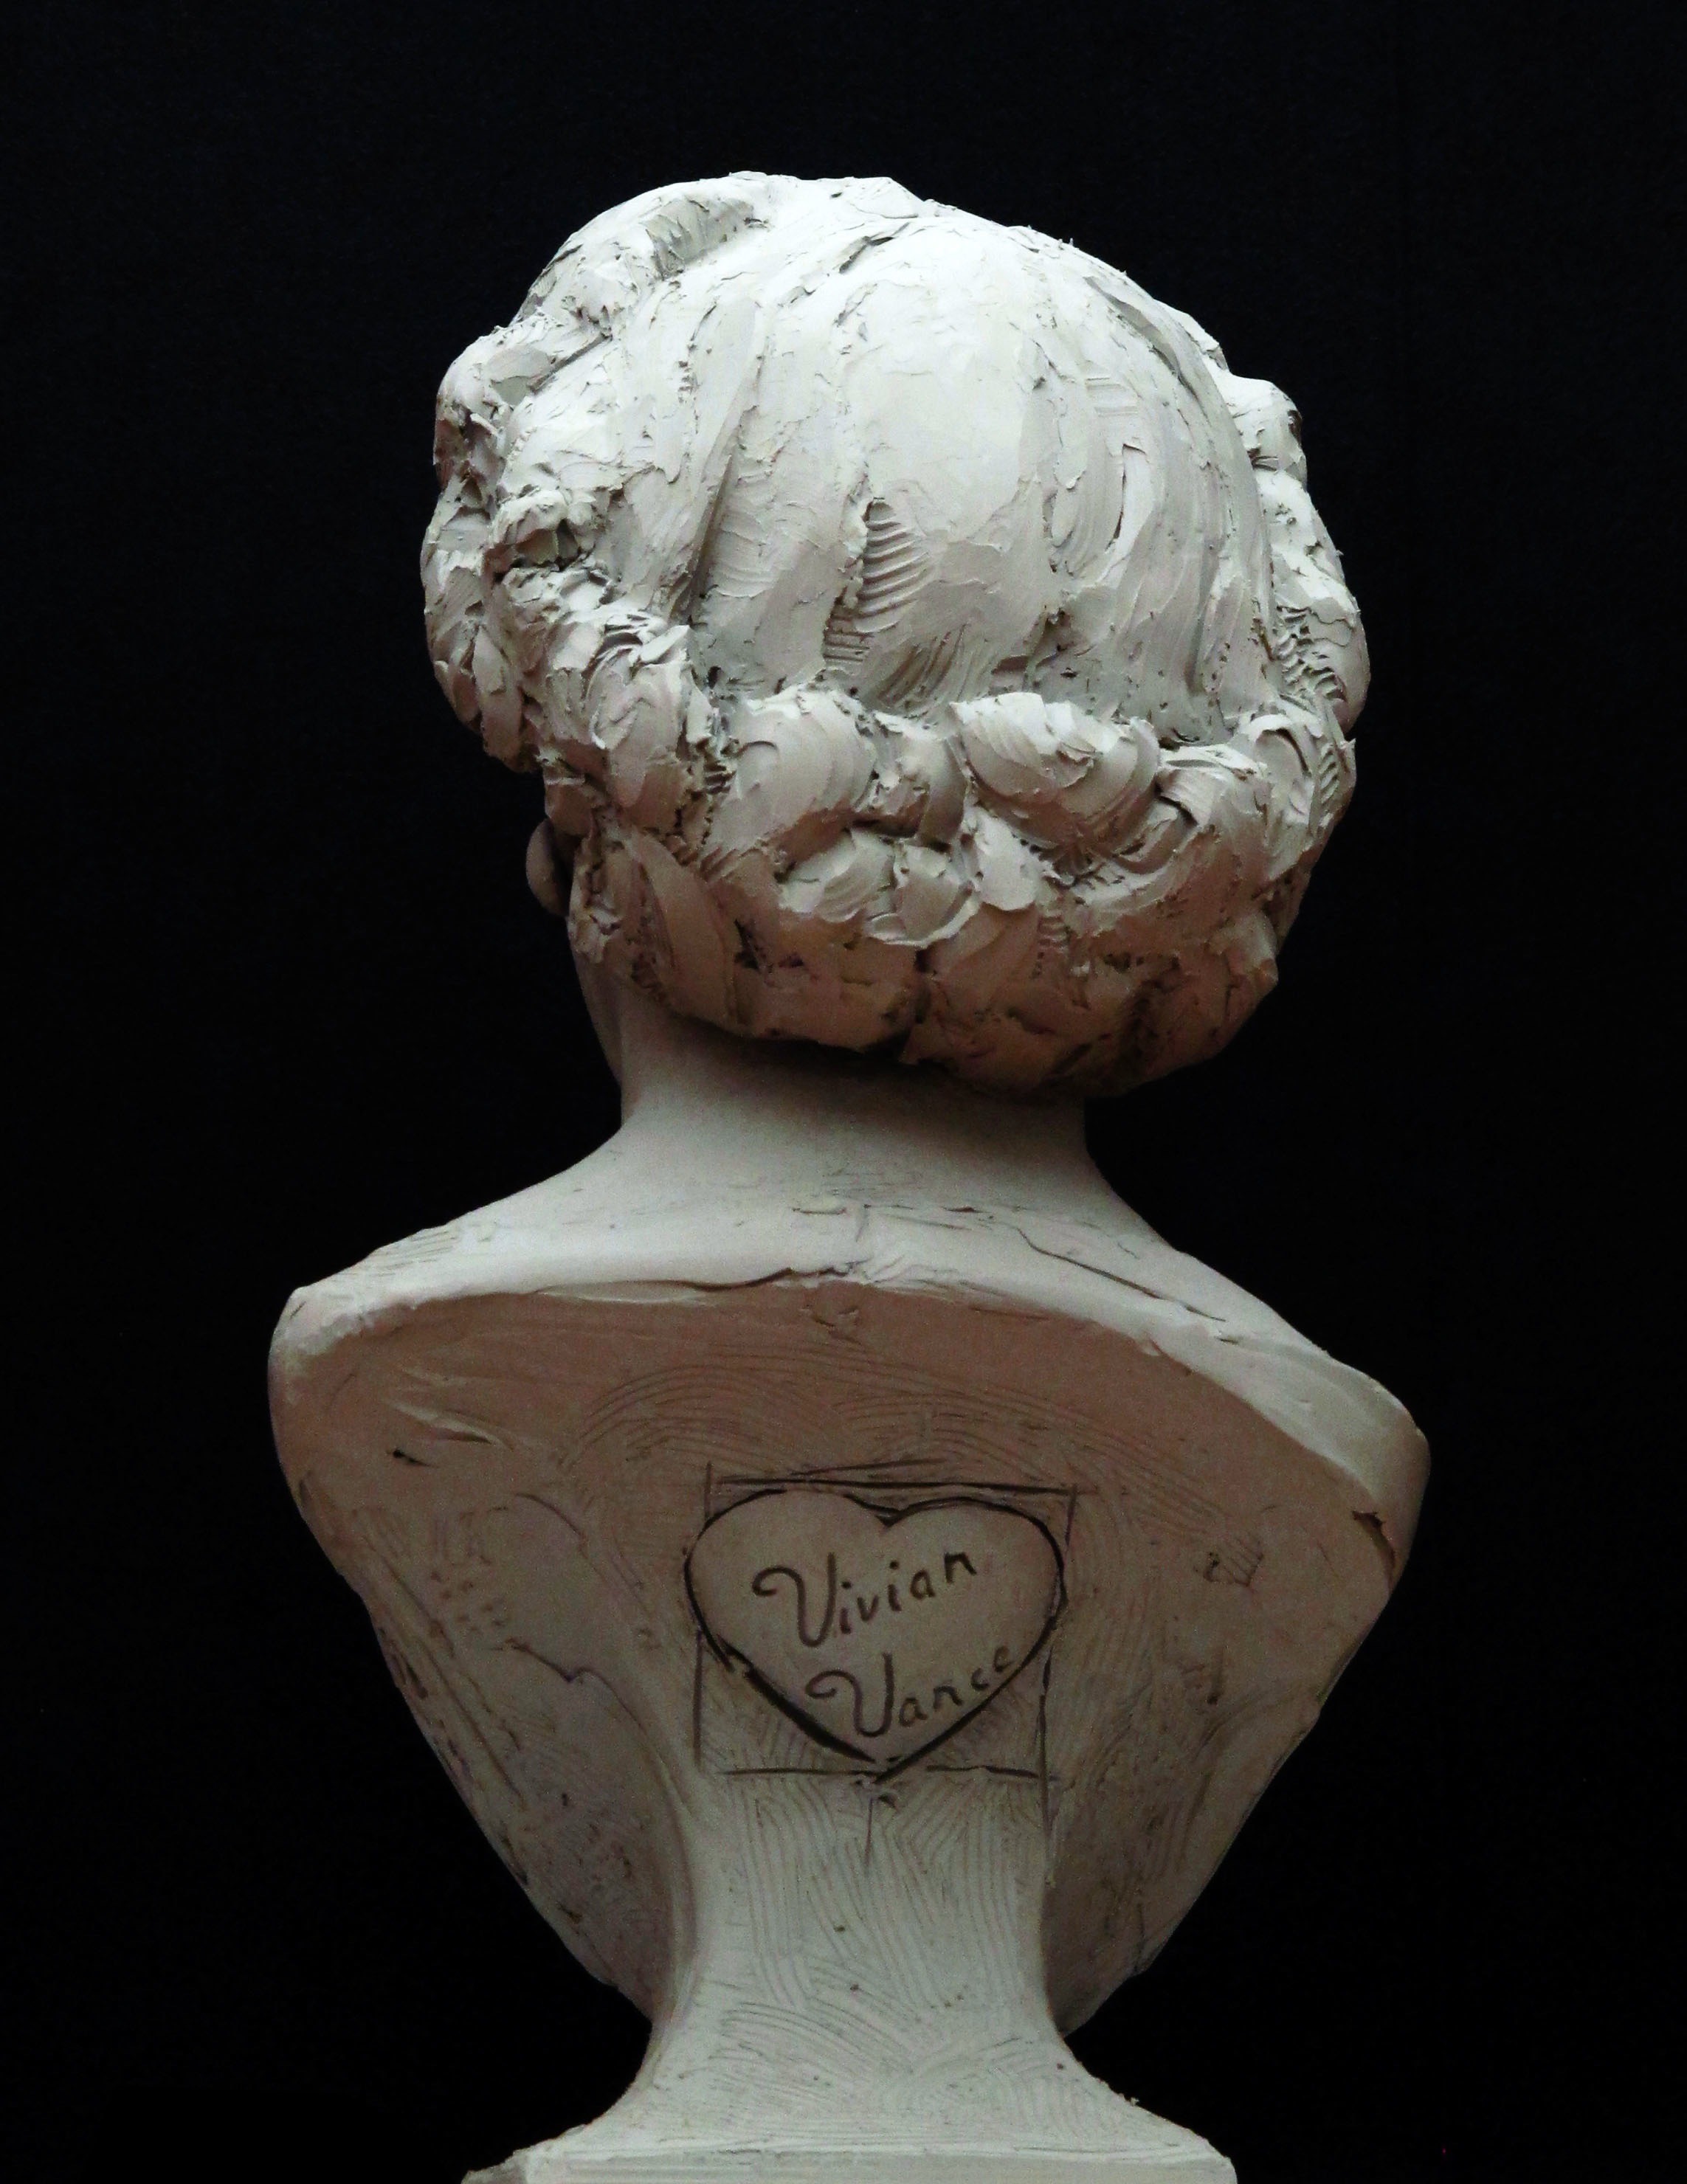 Vivian Vance Bust sculpt in clay rear view